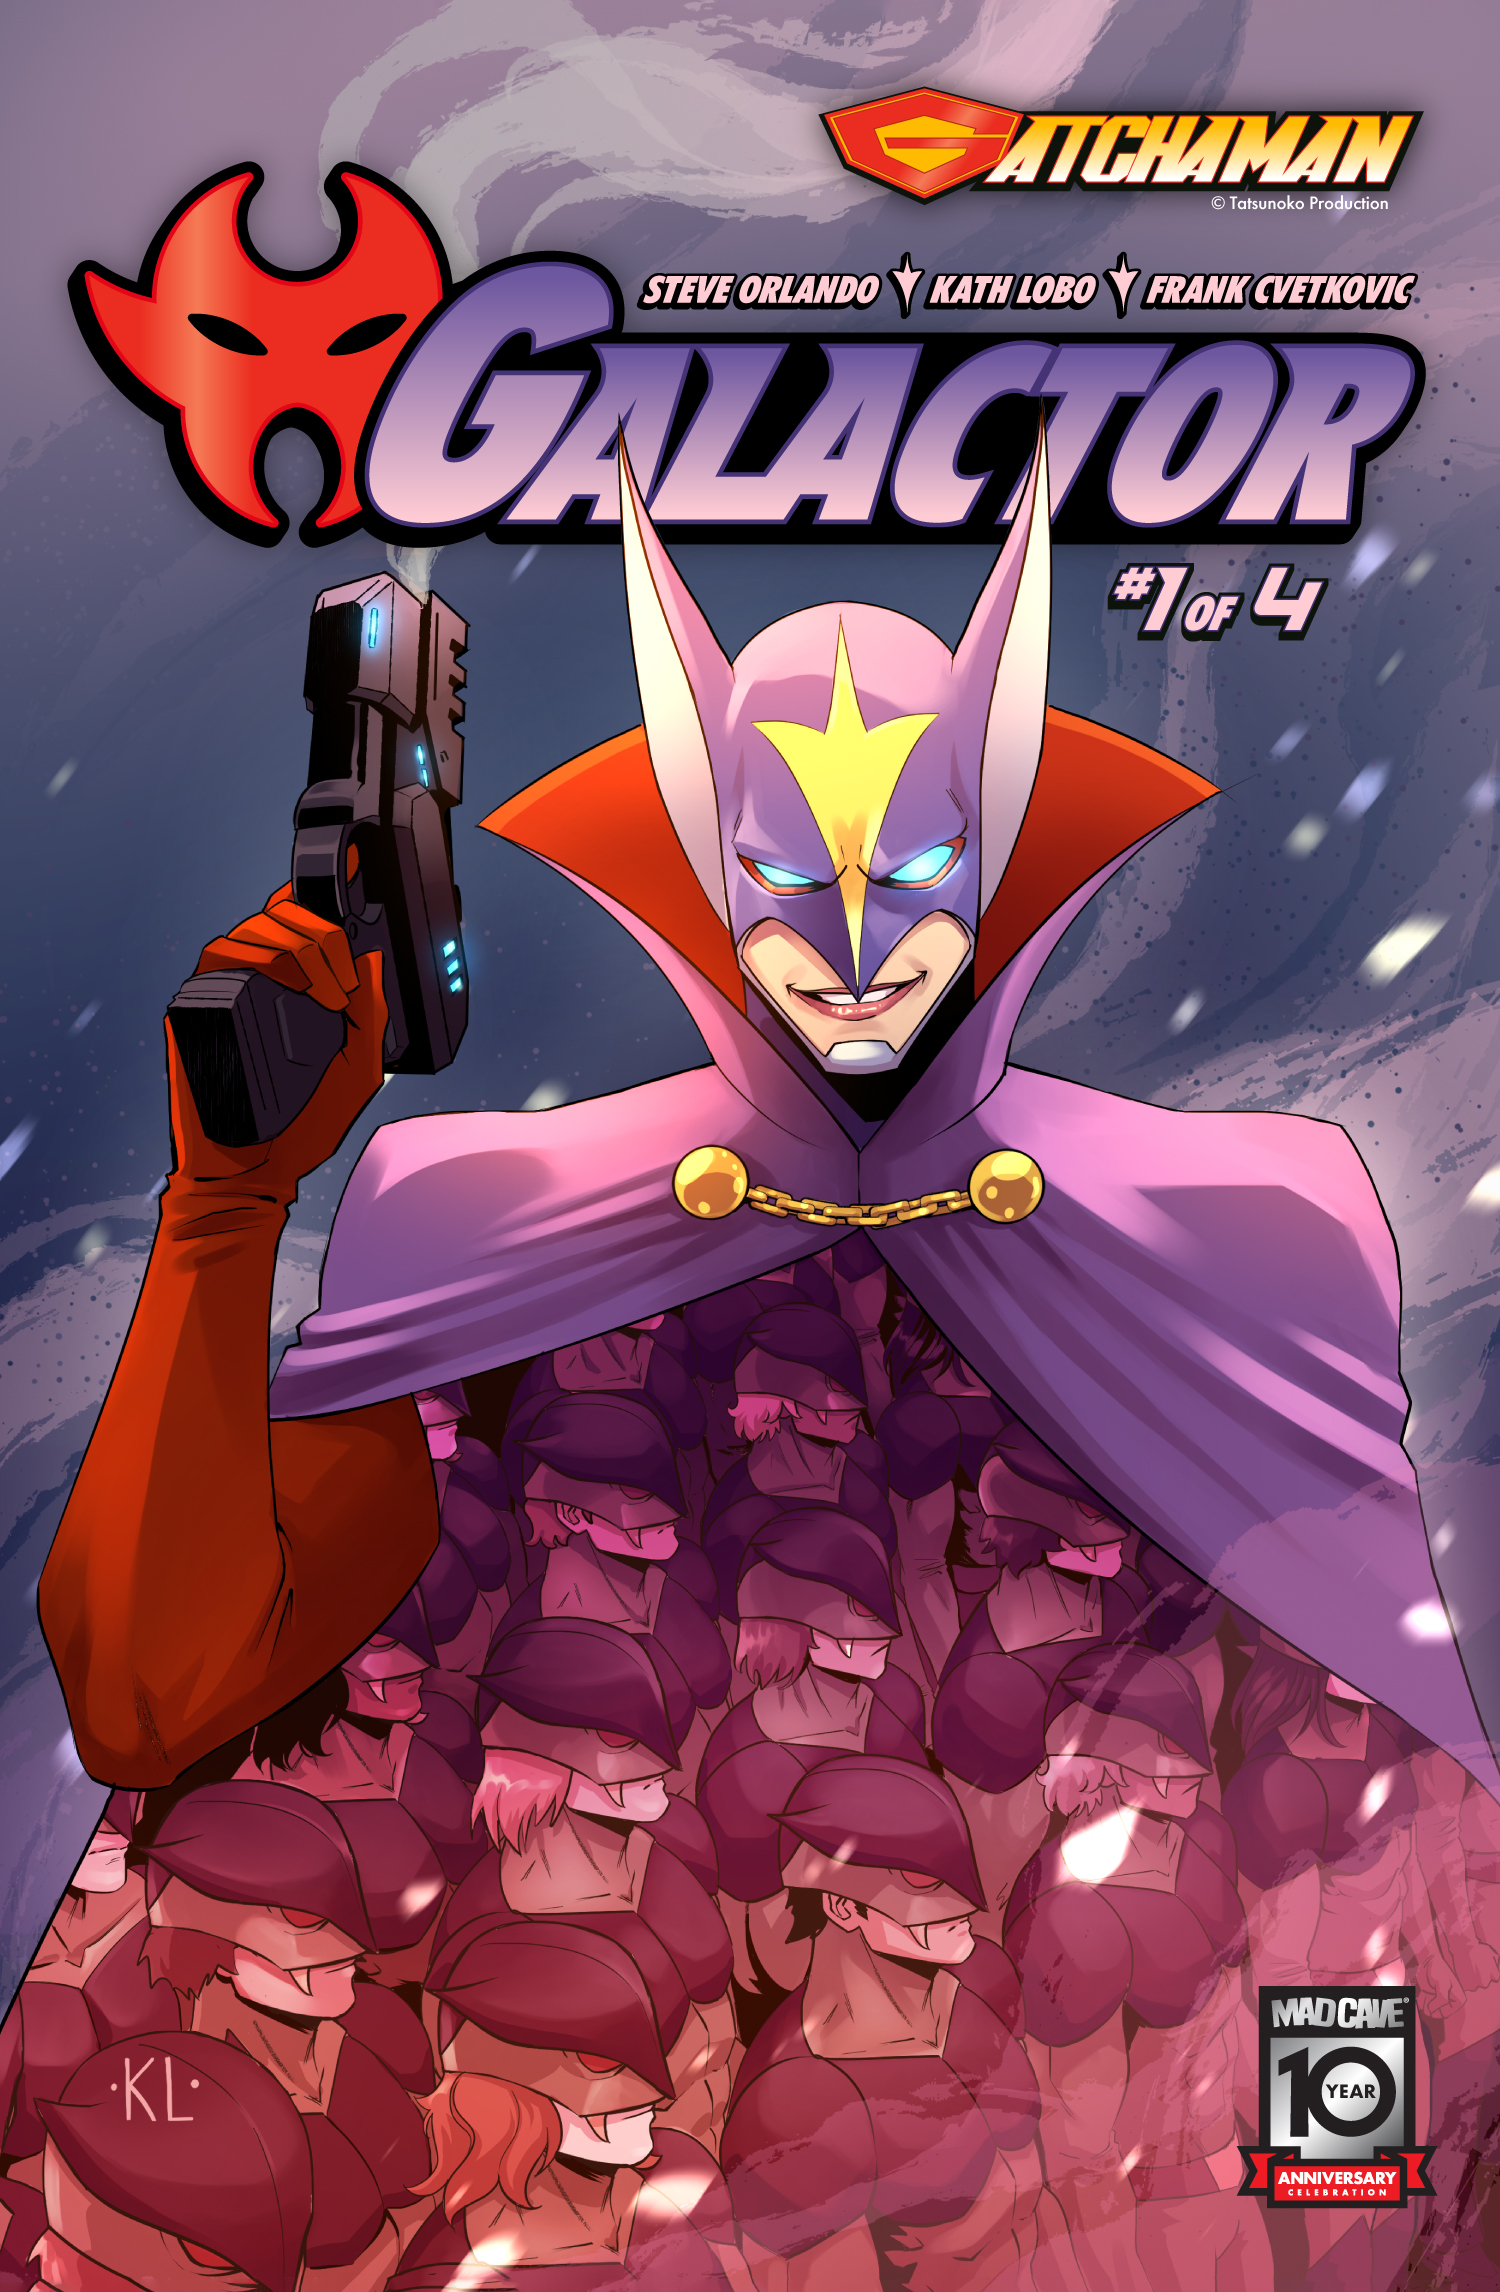 Gatchaman Galactor #1&#160;Cover A Kath Lobo (of 4)